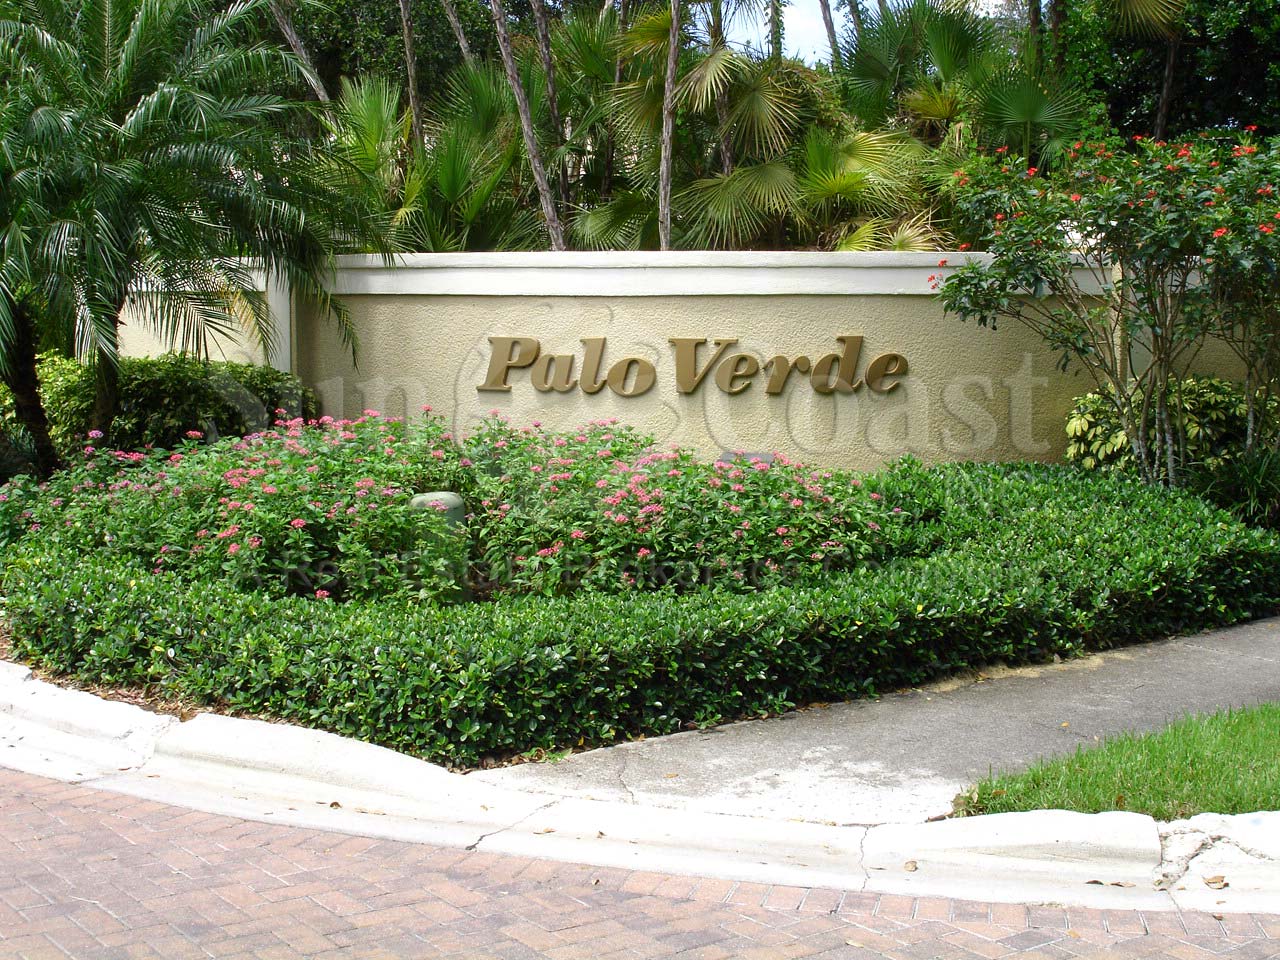 Palo Verde signage